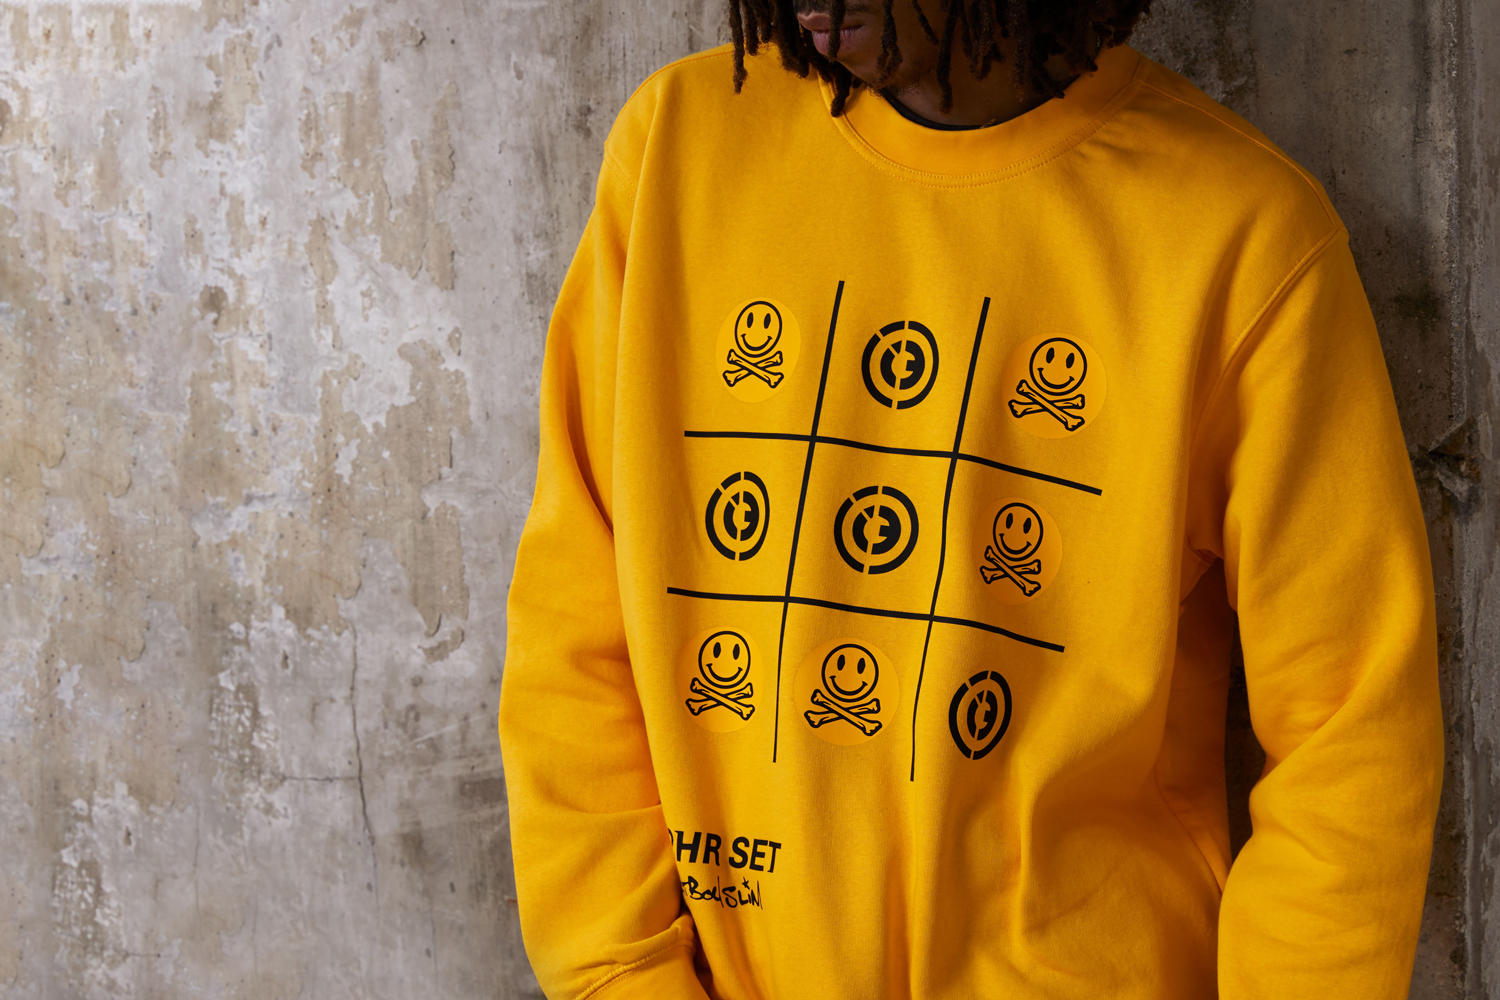 idris elba debuts new 2hr set fashion line inspired by dj culture fatboy slim x sweatshirt yellow